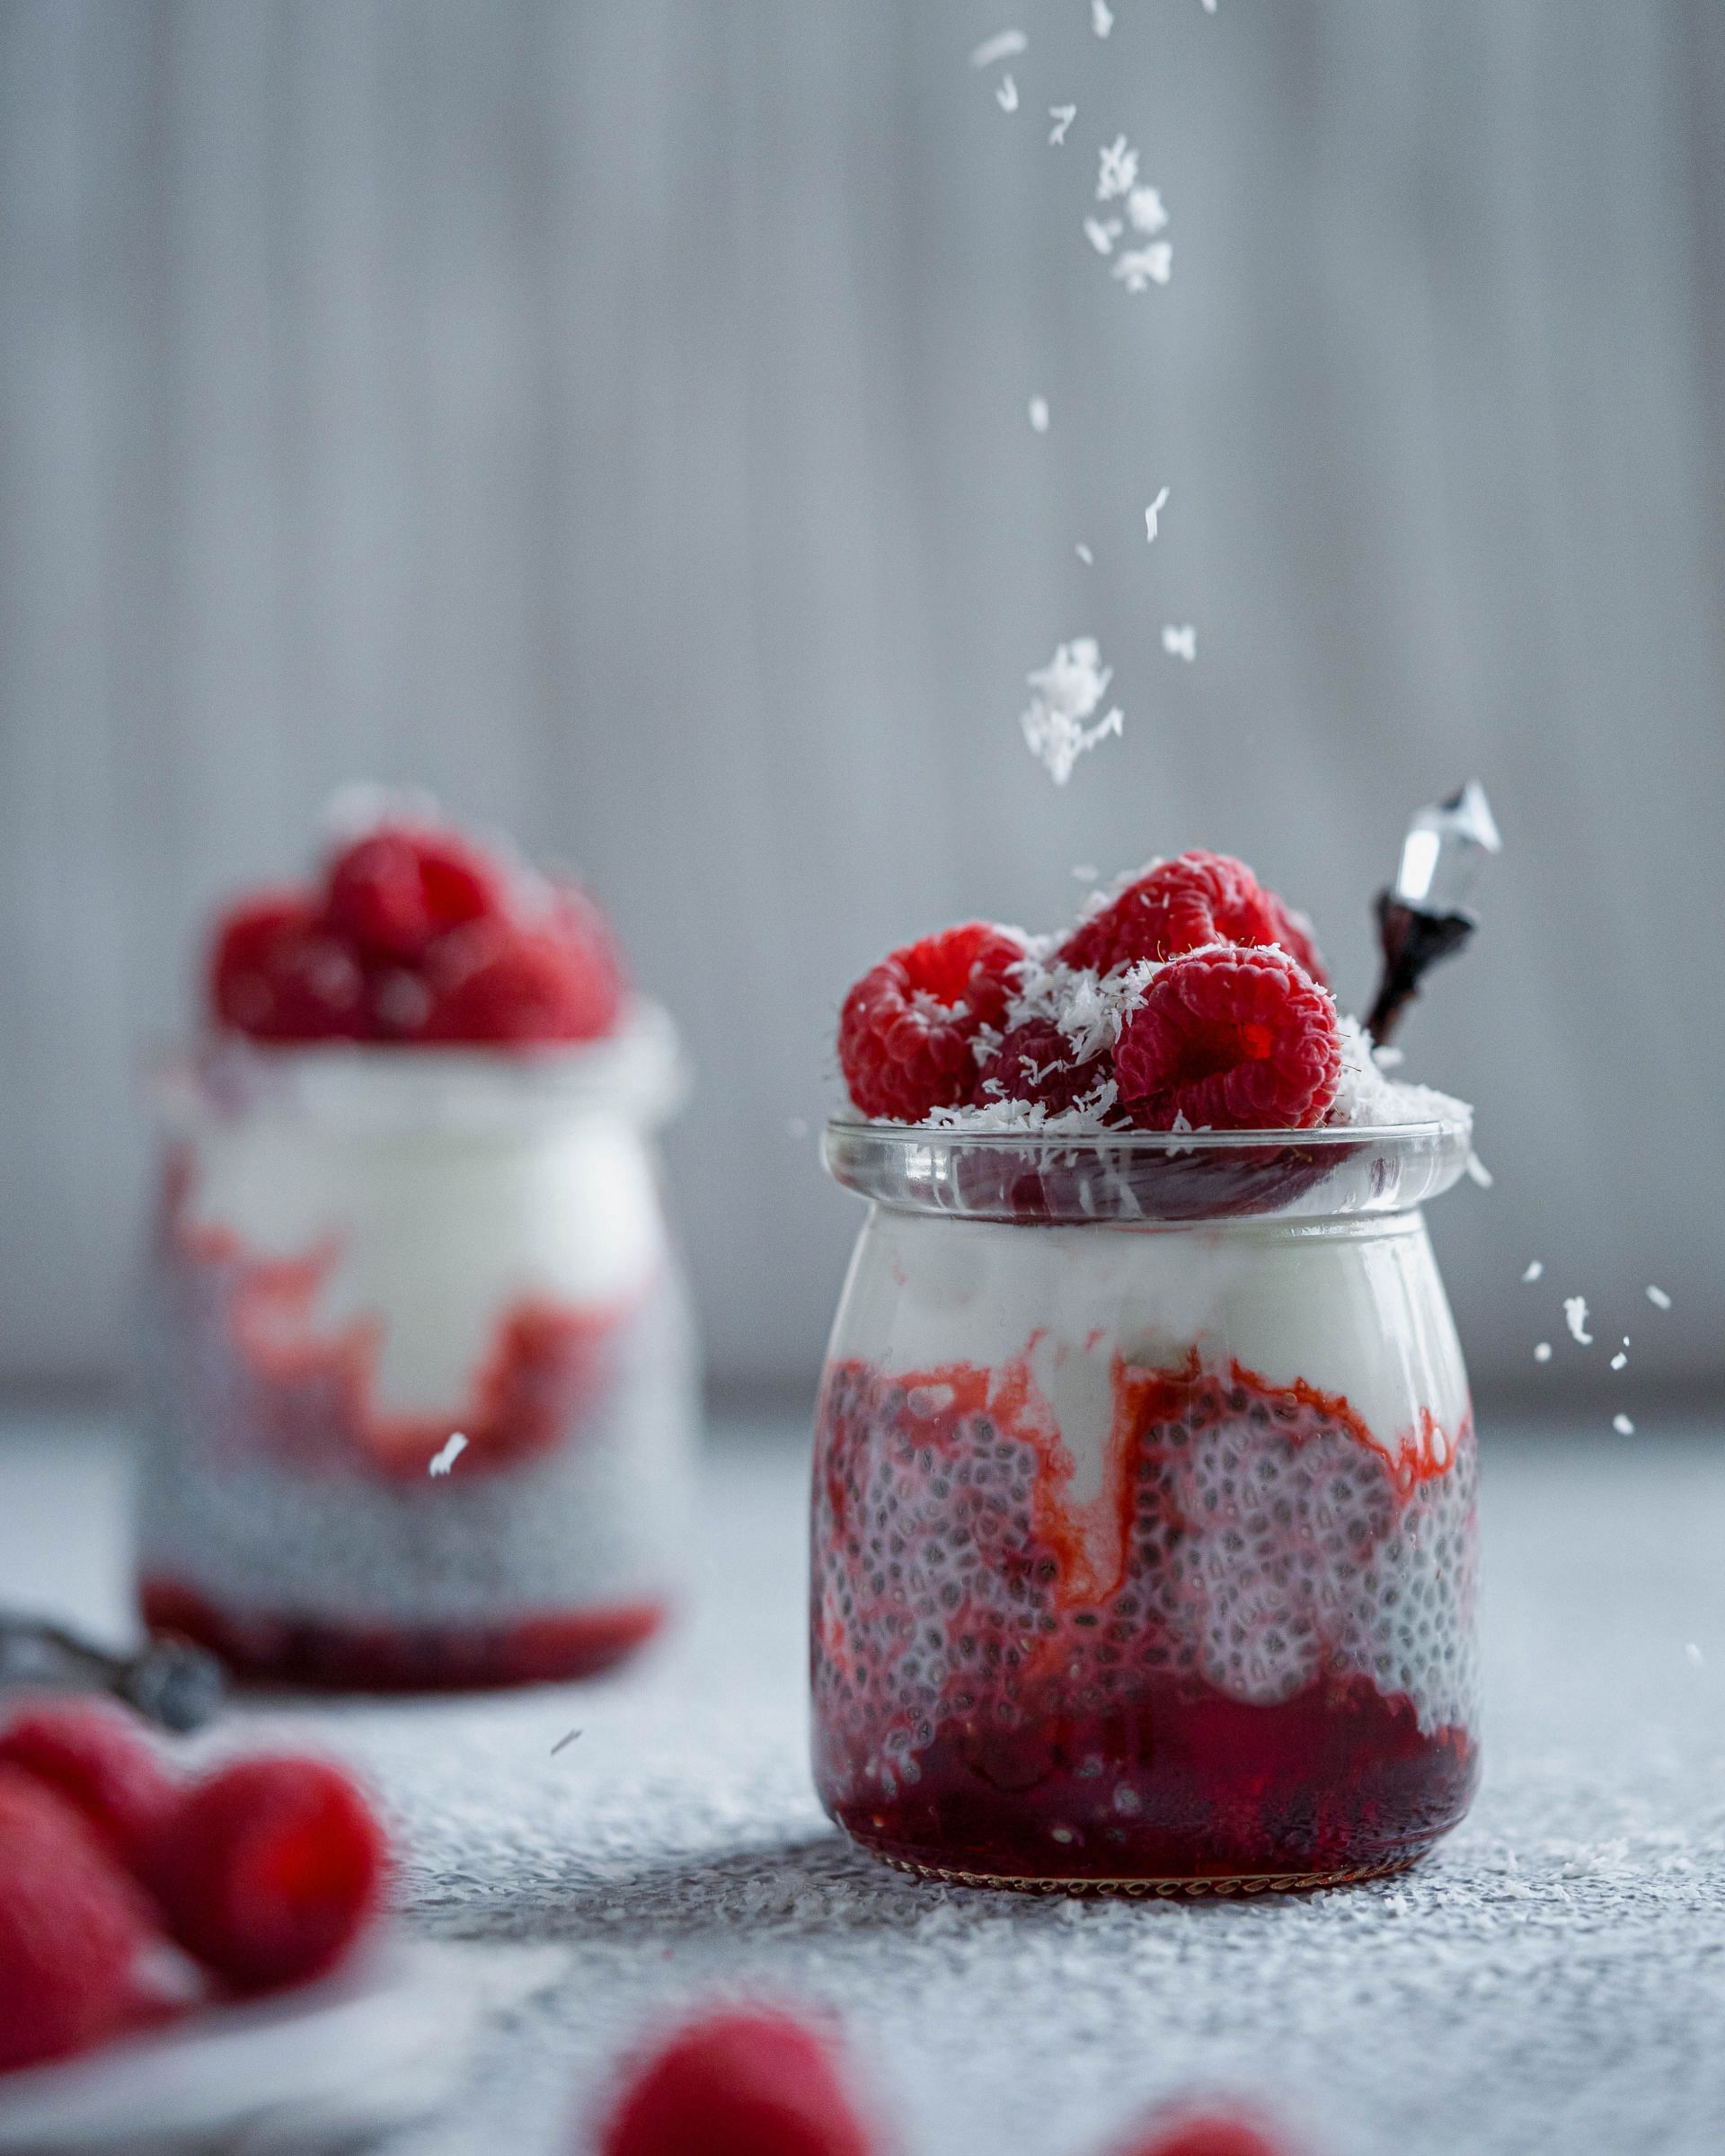 Chia pudding with berries. (Image via Unsplash/ Prchi Palwe)